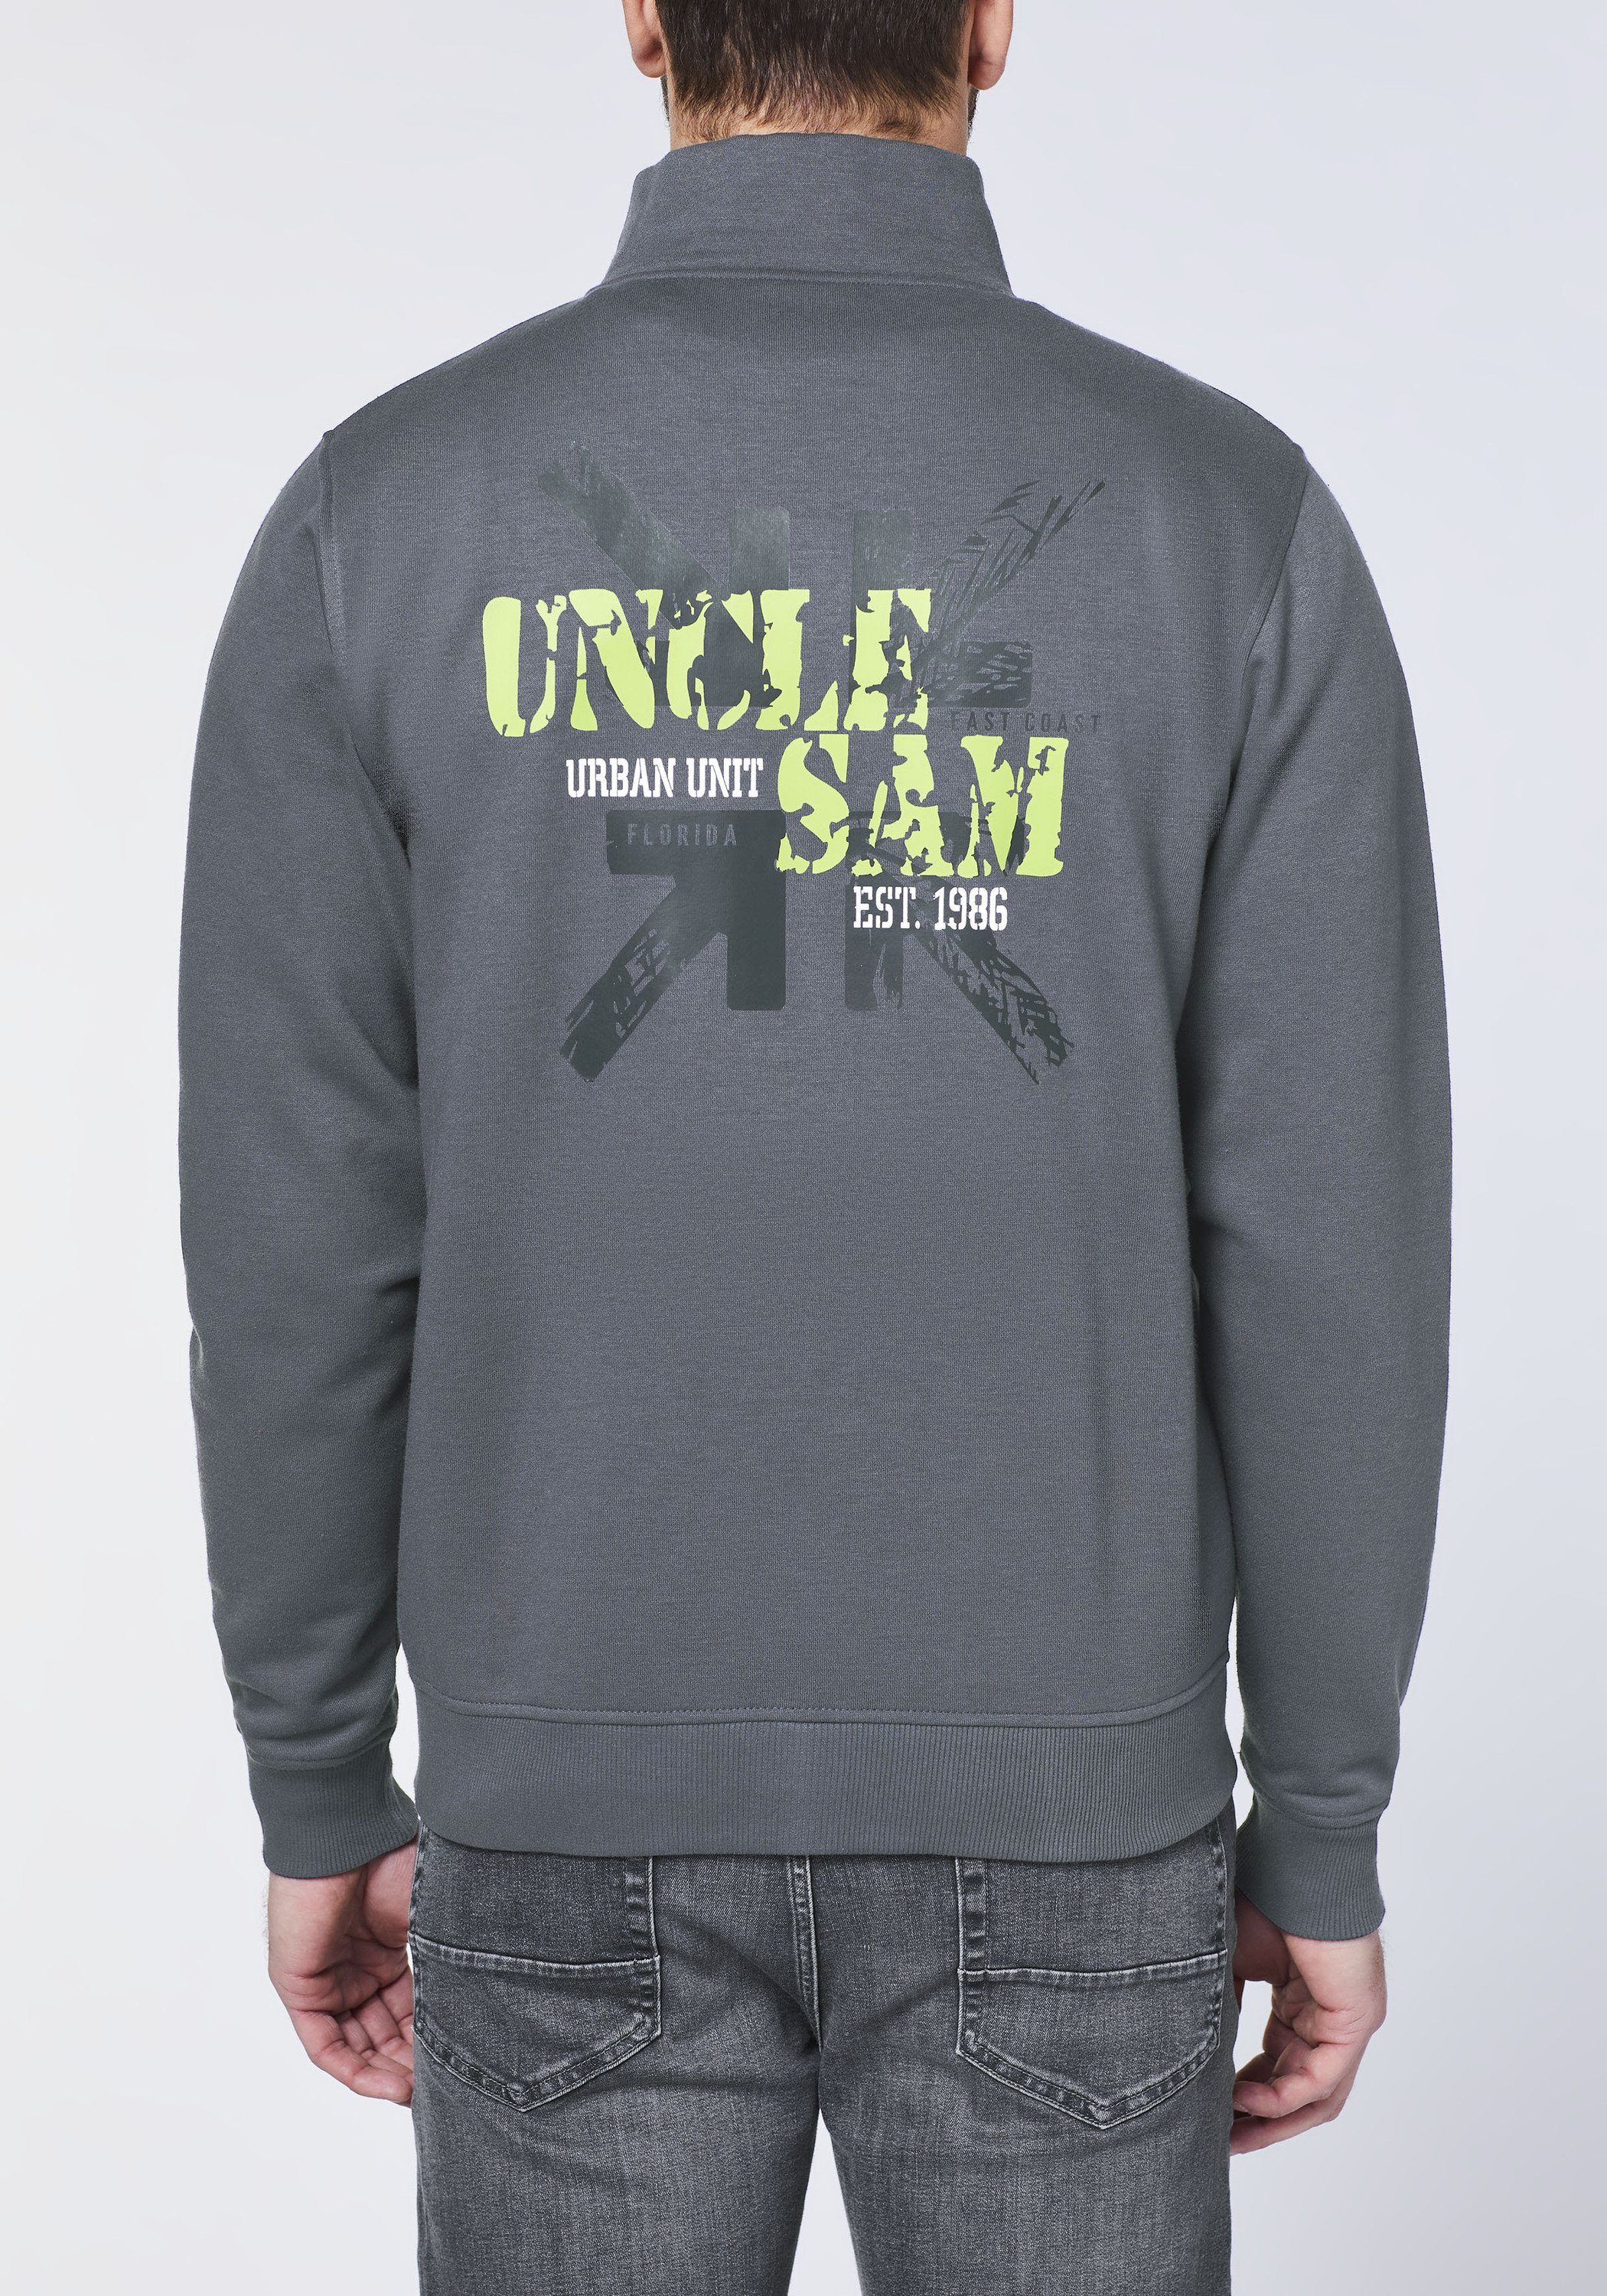 Label-Print Sweatjacke mit Sam Uncle rückseitigem